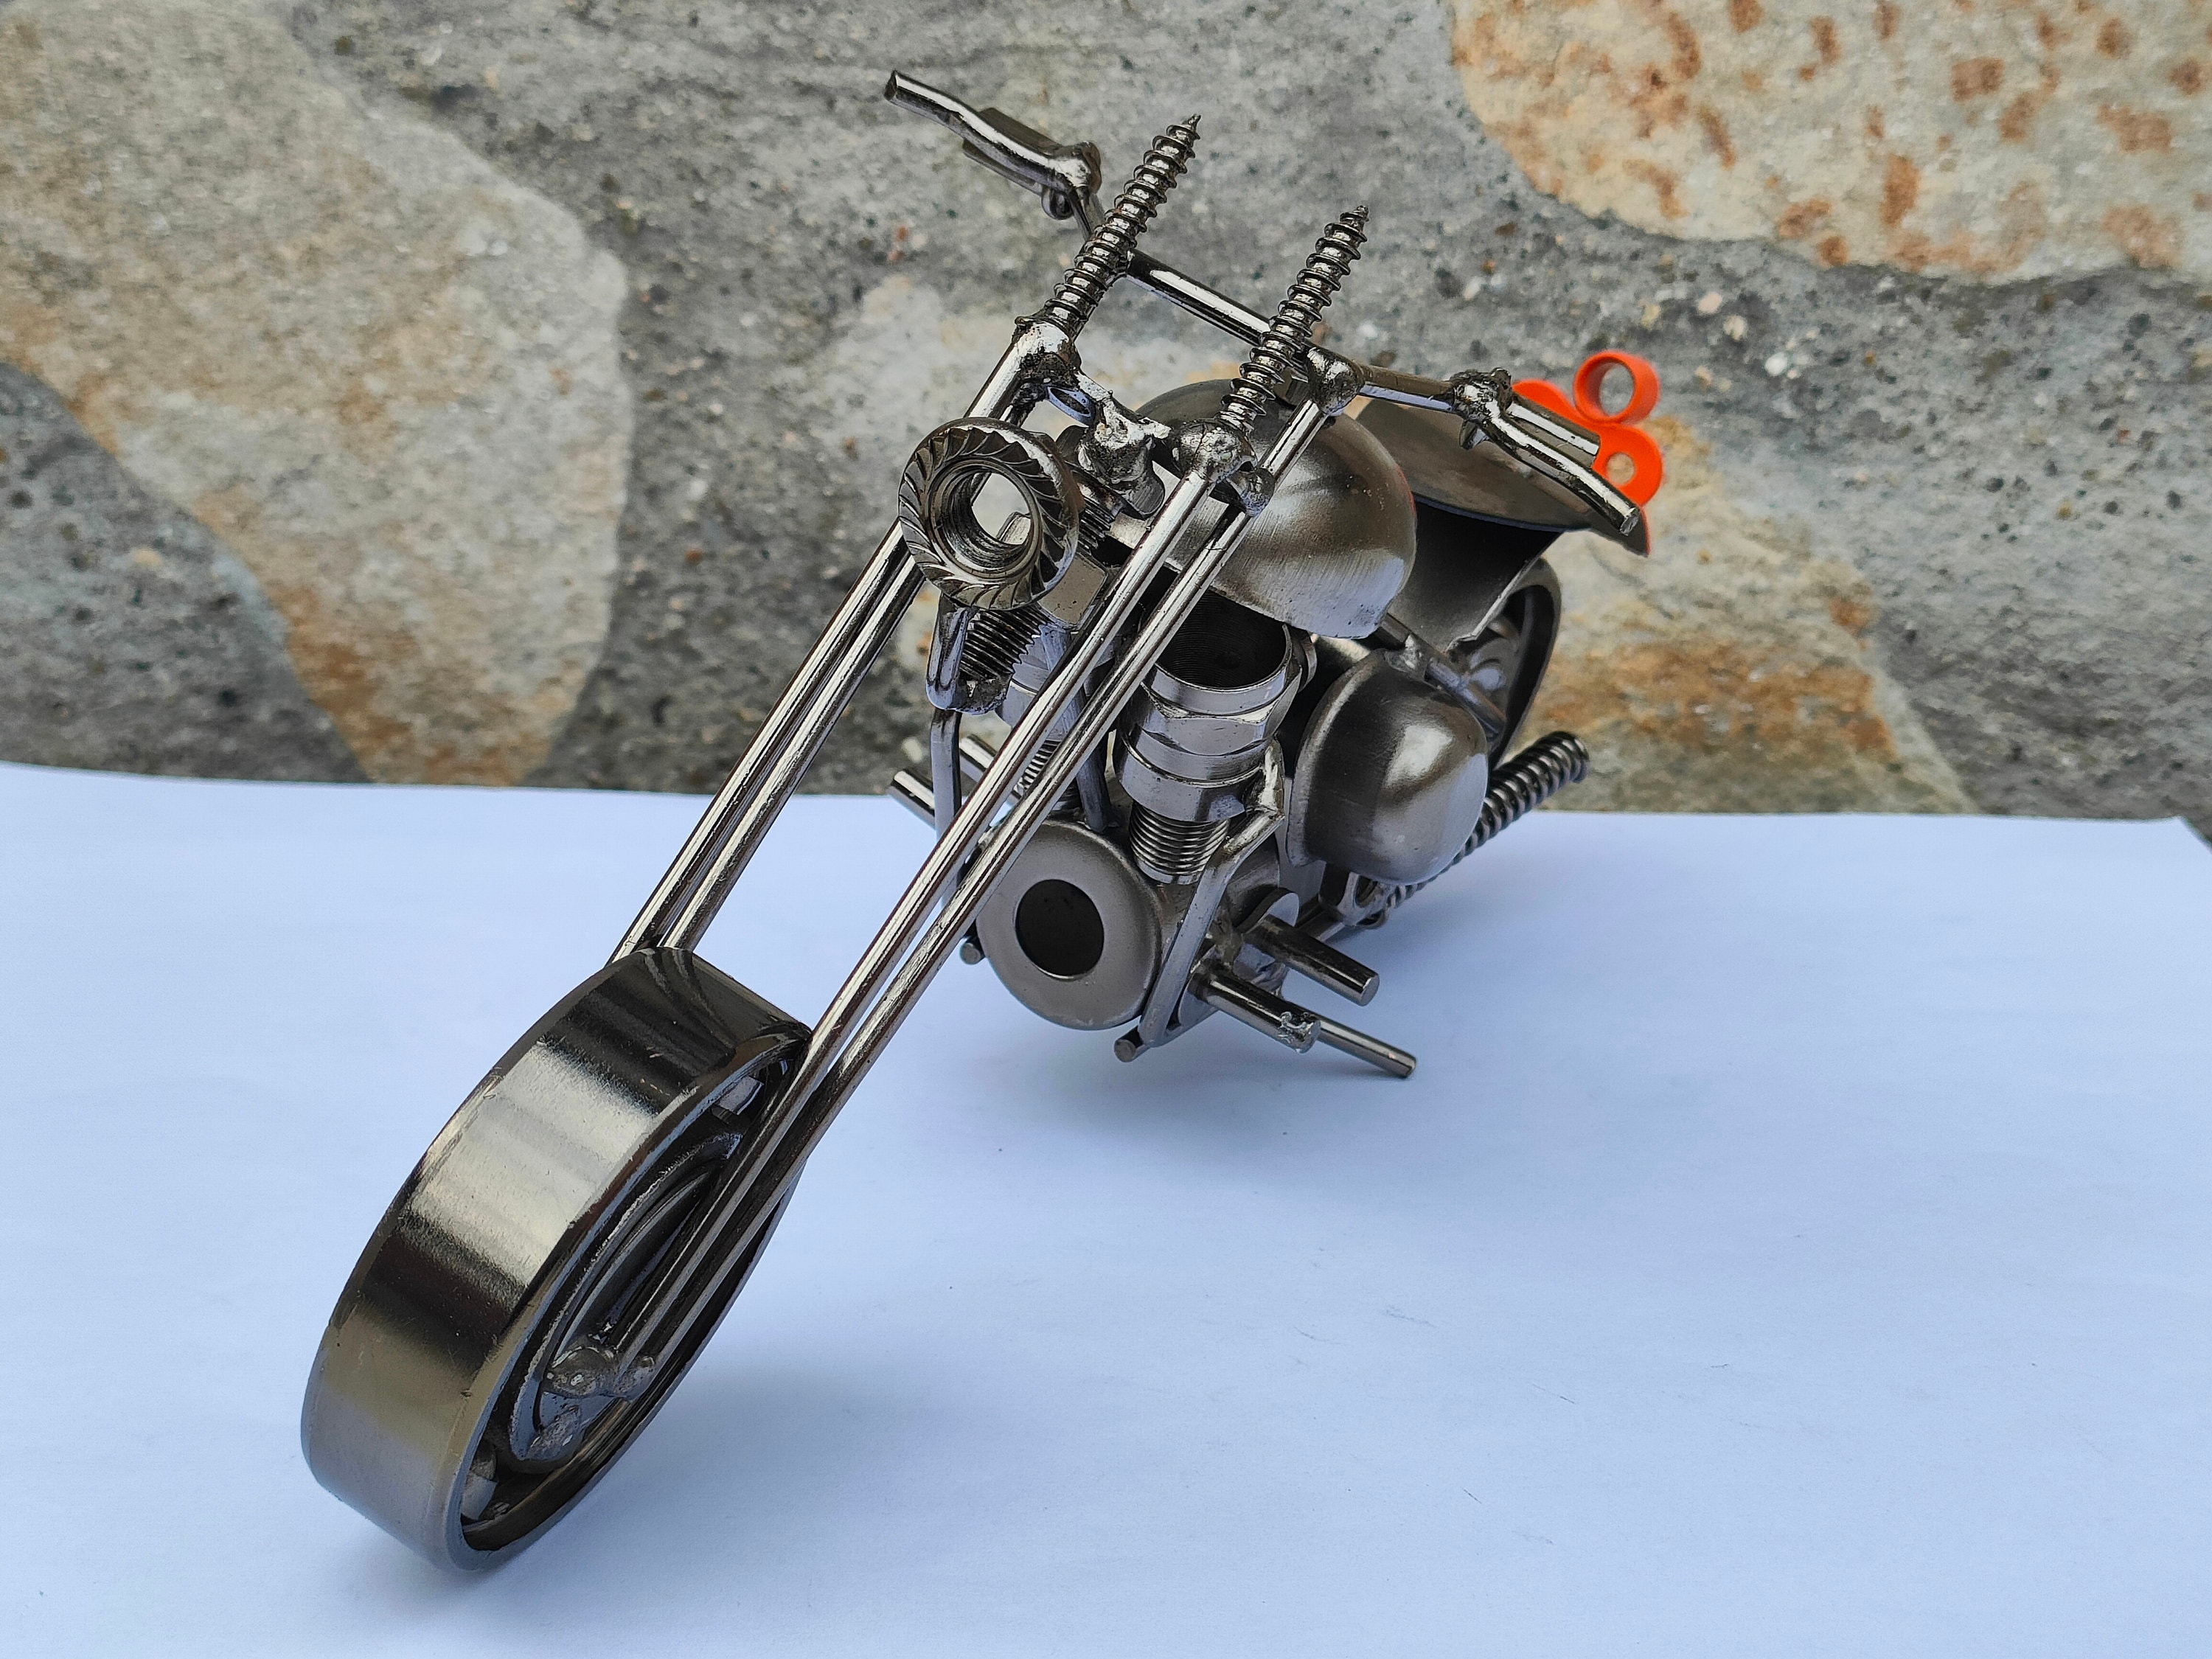 Moto miniature métal -  France